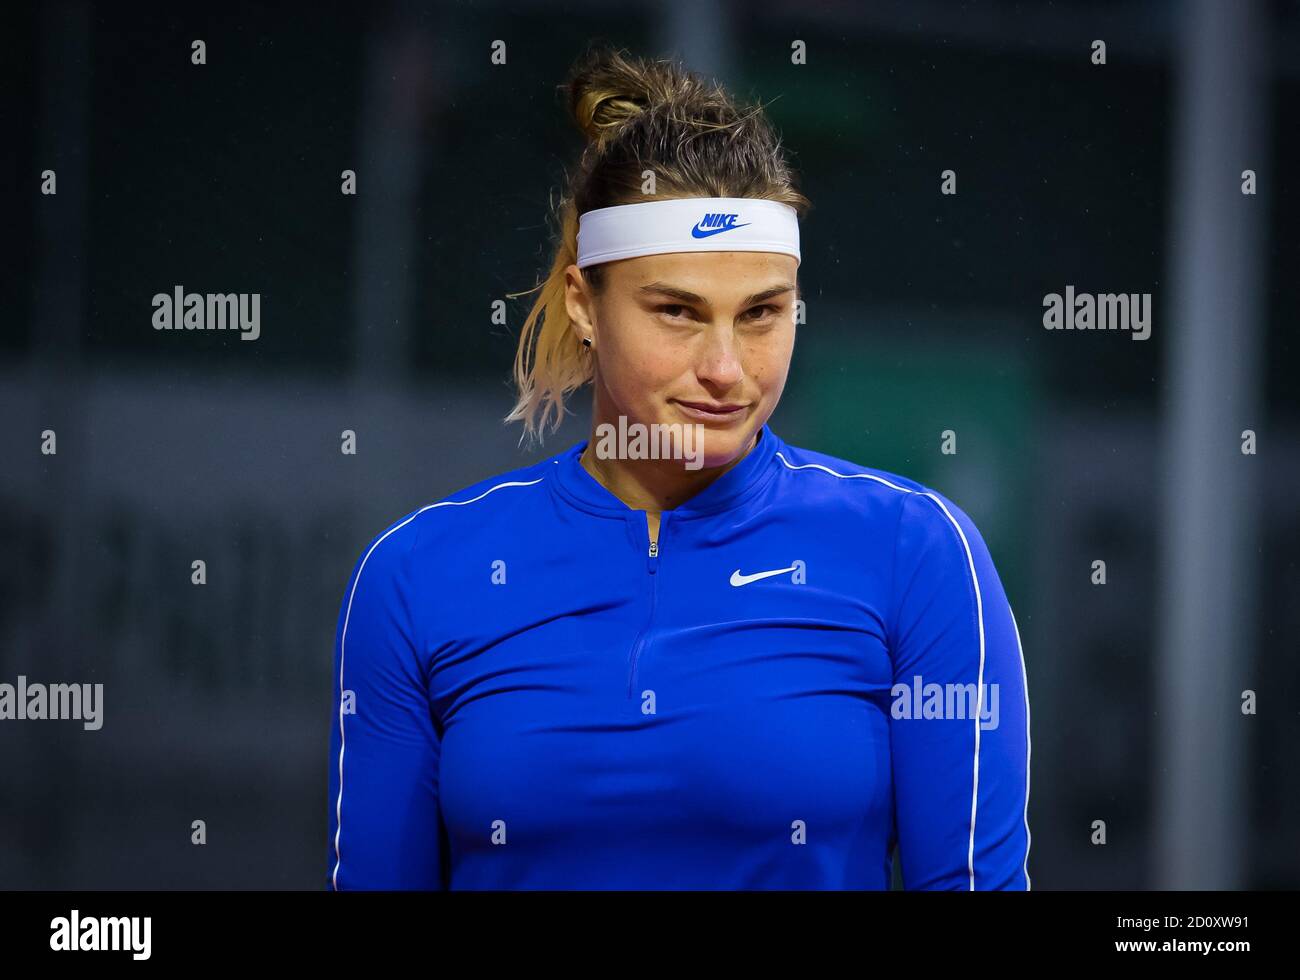 Aryna Sabalenka of Belarus playing doubles at the Roland Garros 2020, Grand Slam tennis tournament, on October 3, 2020 at Roland Garros stadium in Par Stock Photo